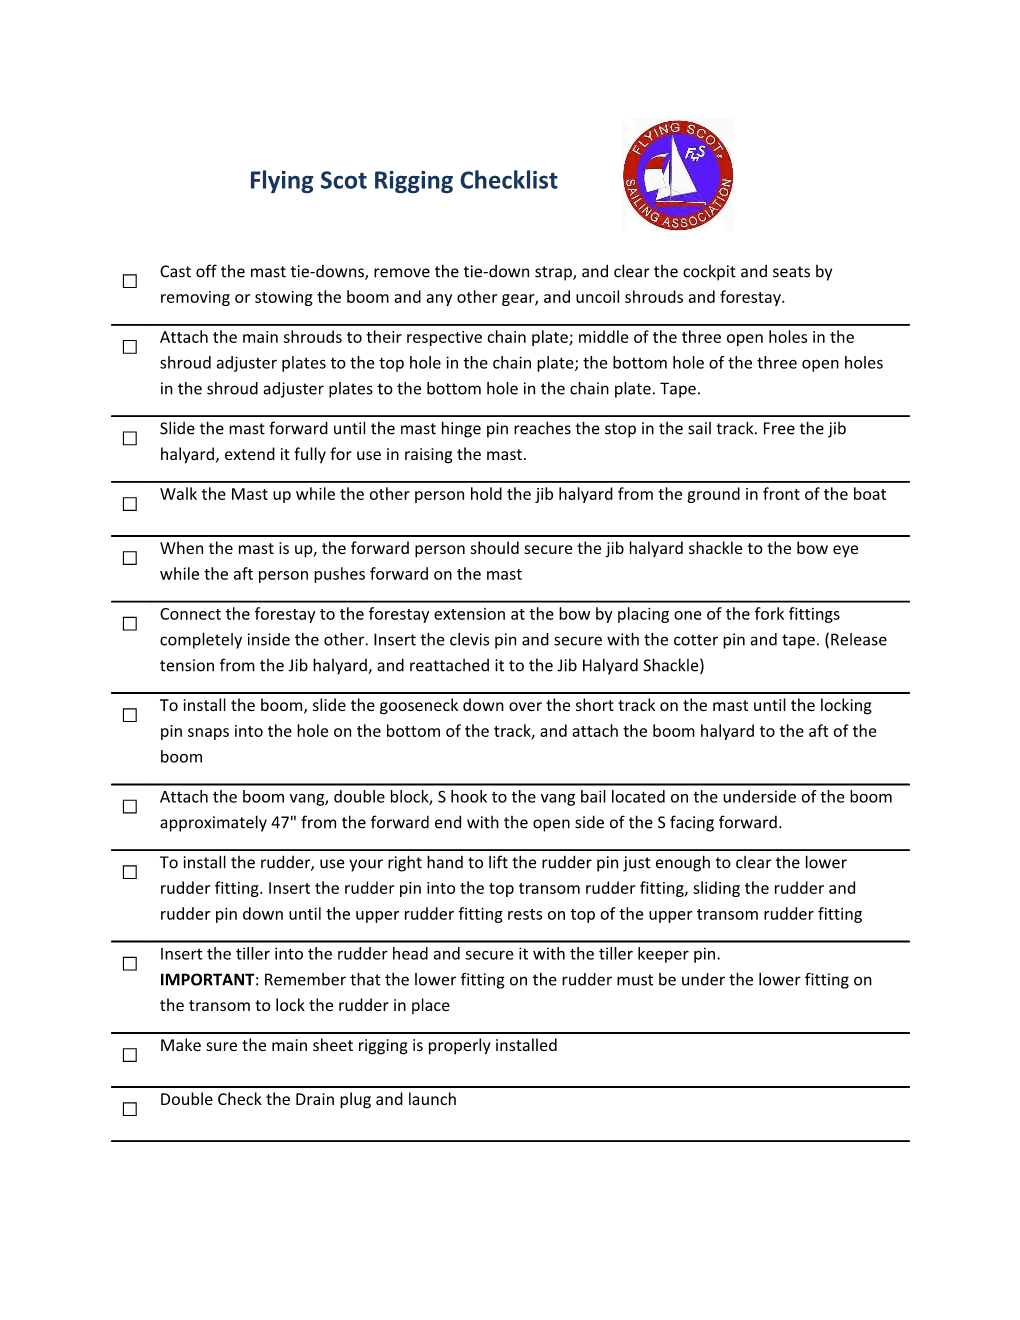 Flying Scot Rigging Checklist